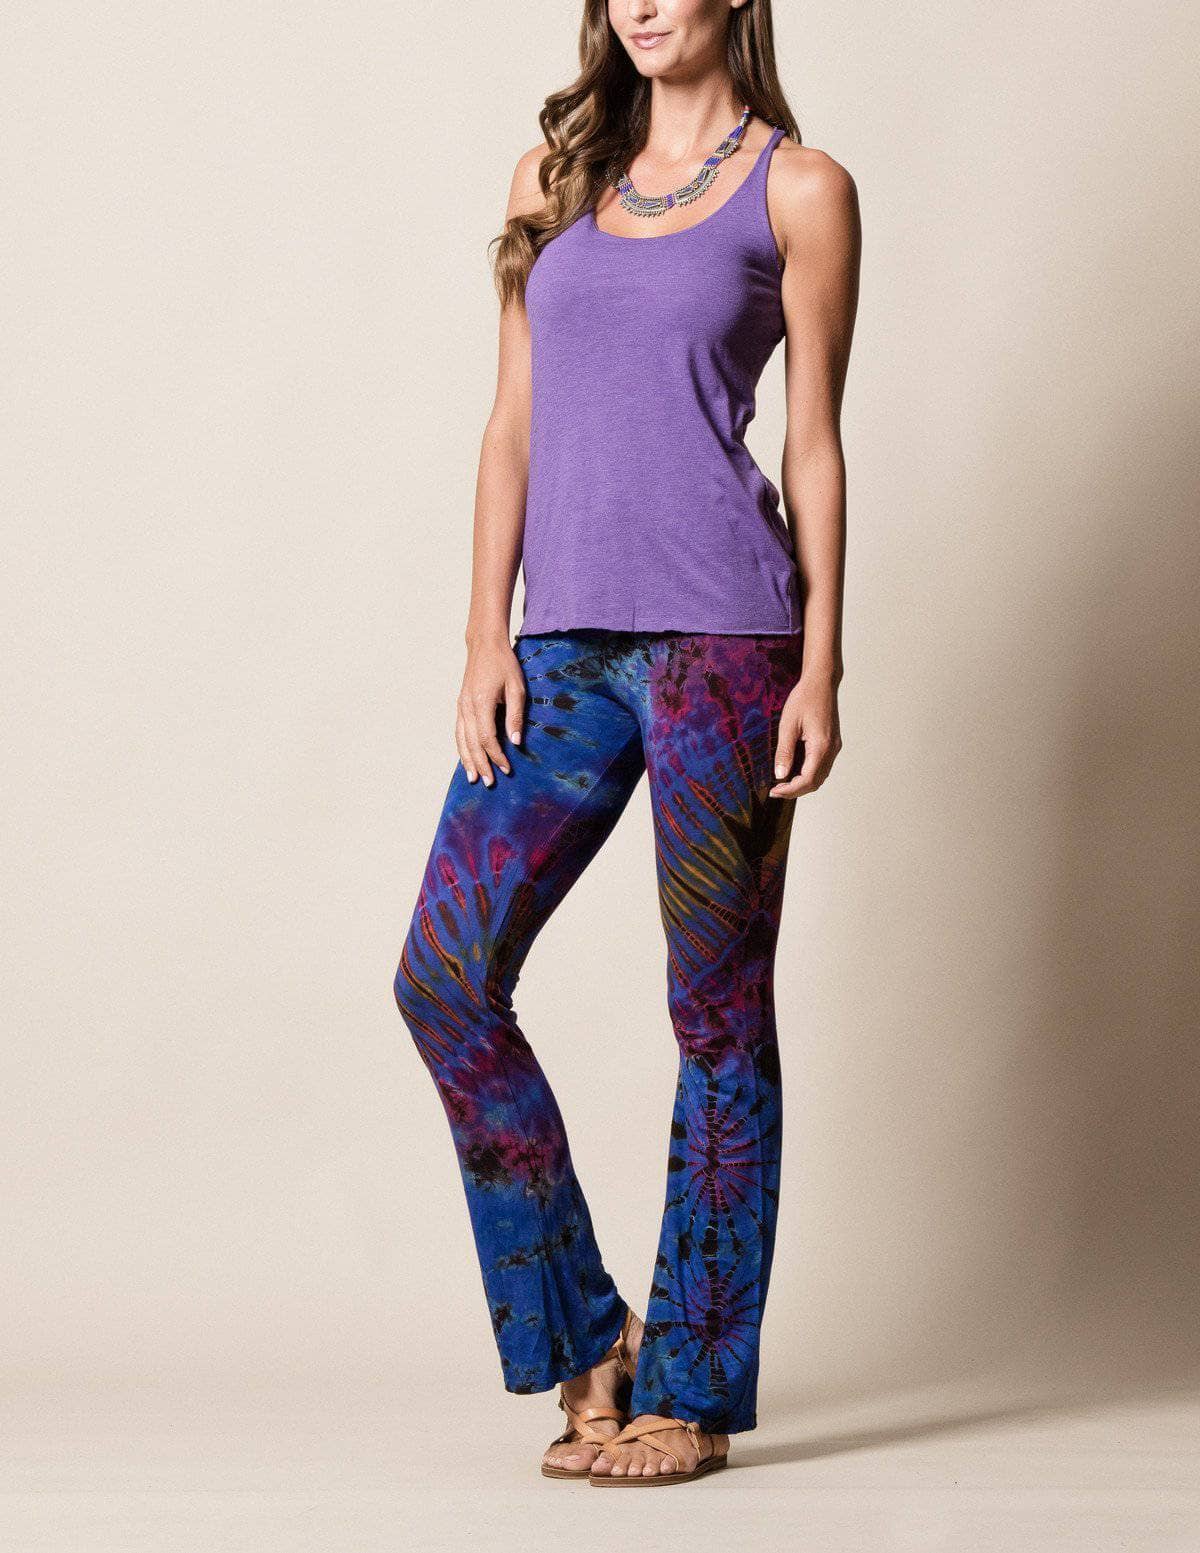 Aayomet Yoga Pants For Women Bootcut Women's High Rise Tie Dye